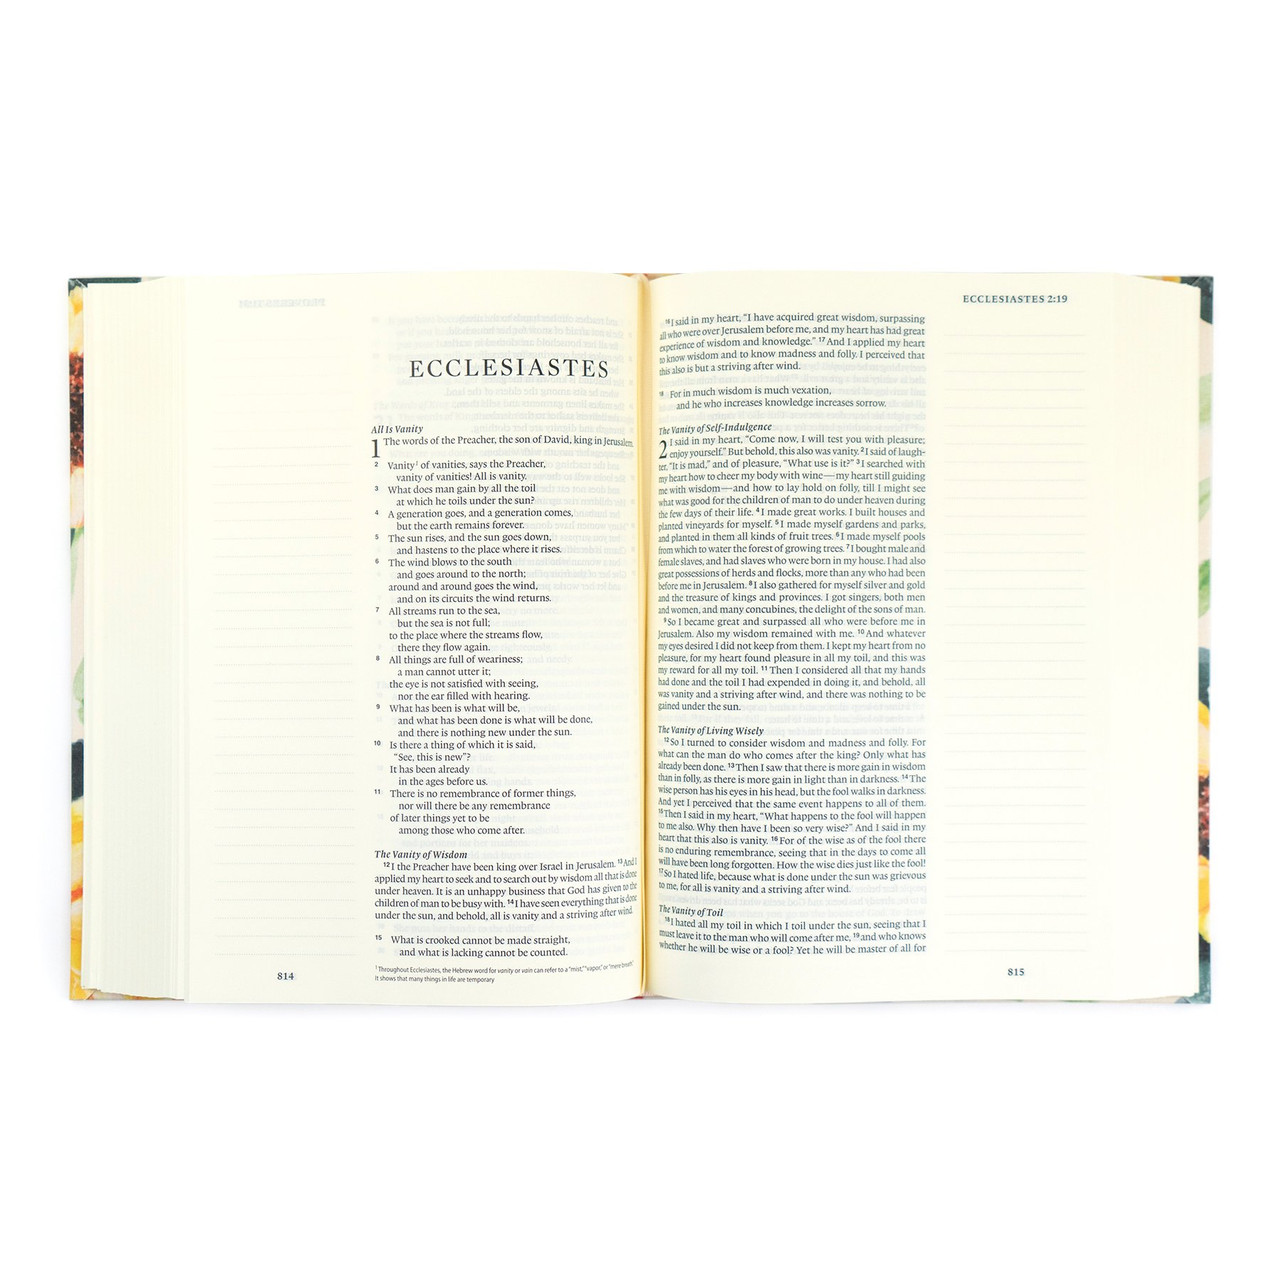 Bible Journaling Printable, Psalm 121 Bible Washi Tape, Bible Journaling  Stickers, Instant Download 